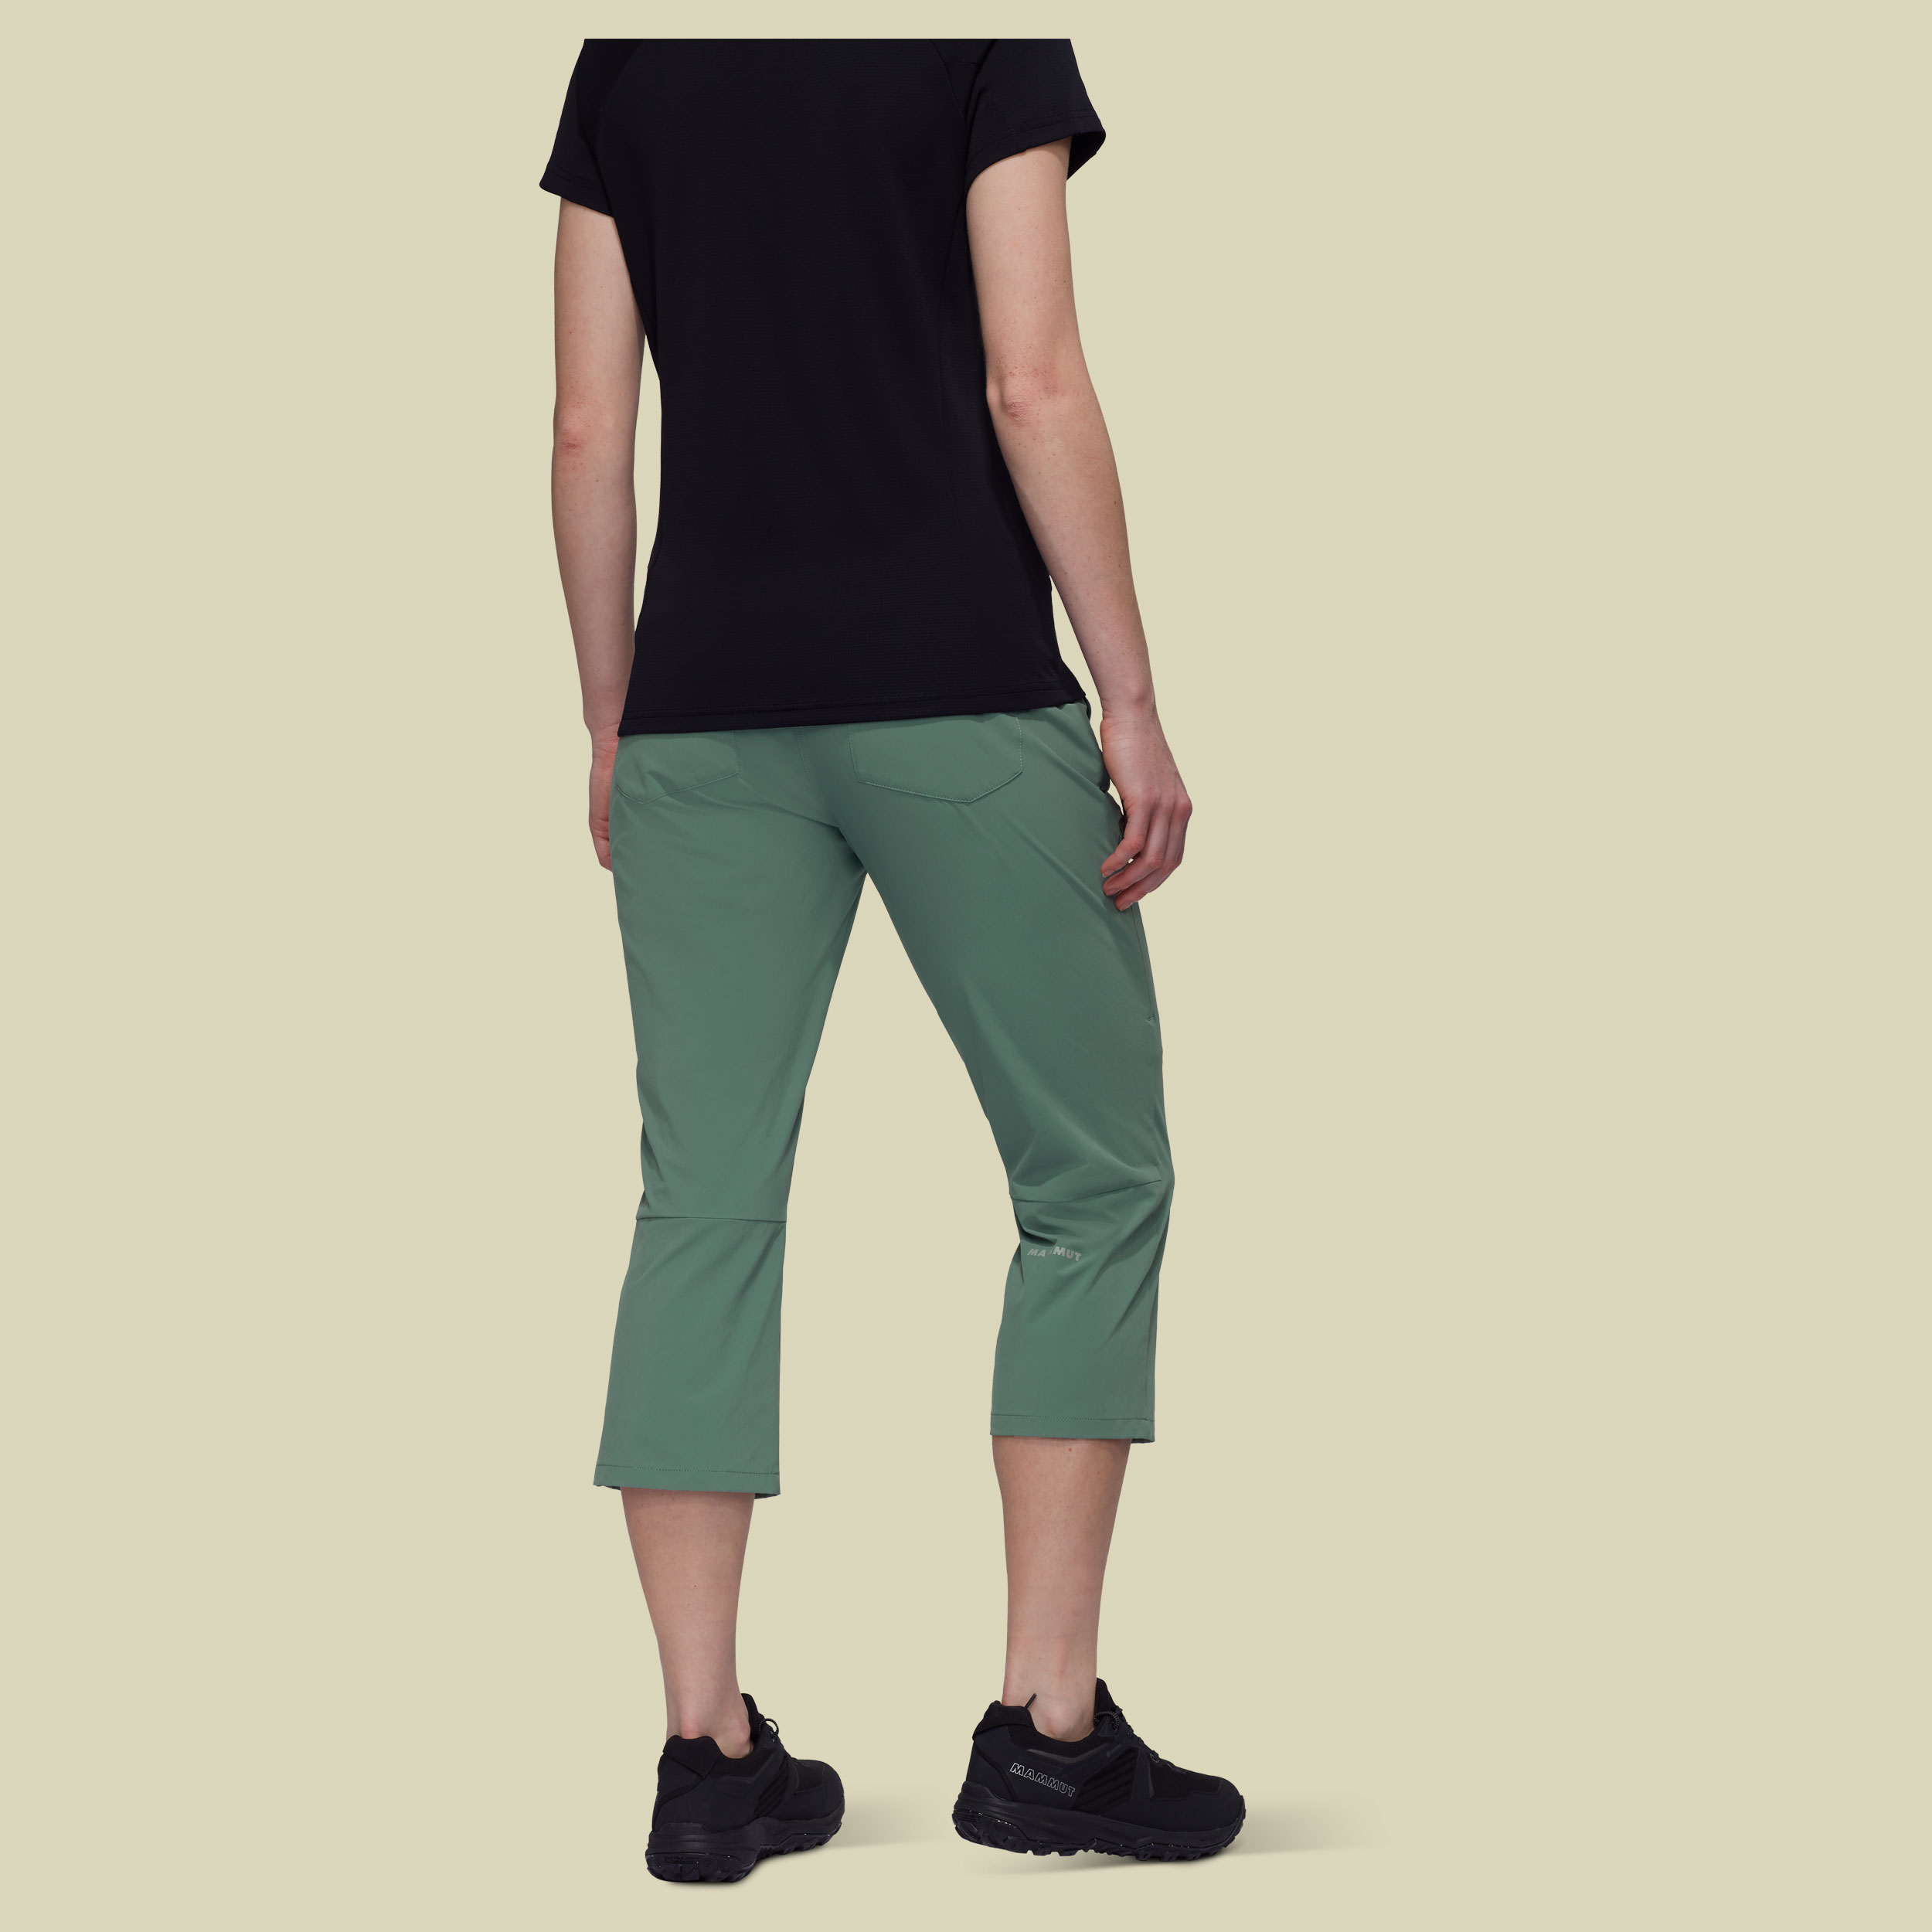 Runbold Capri Pants Women grün 44 - dark jade